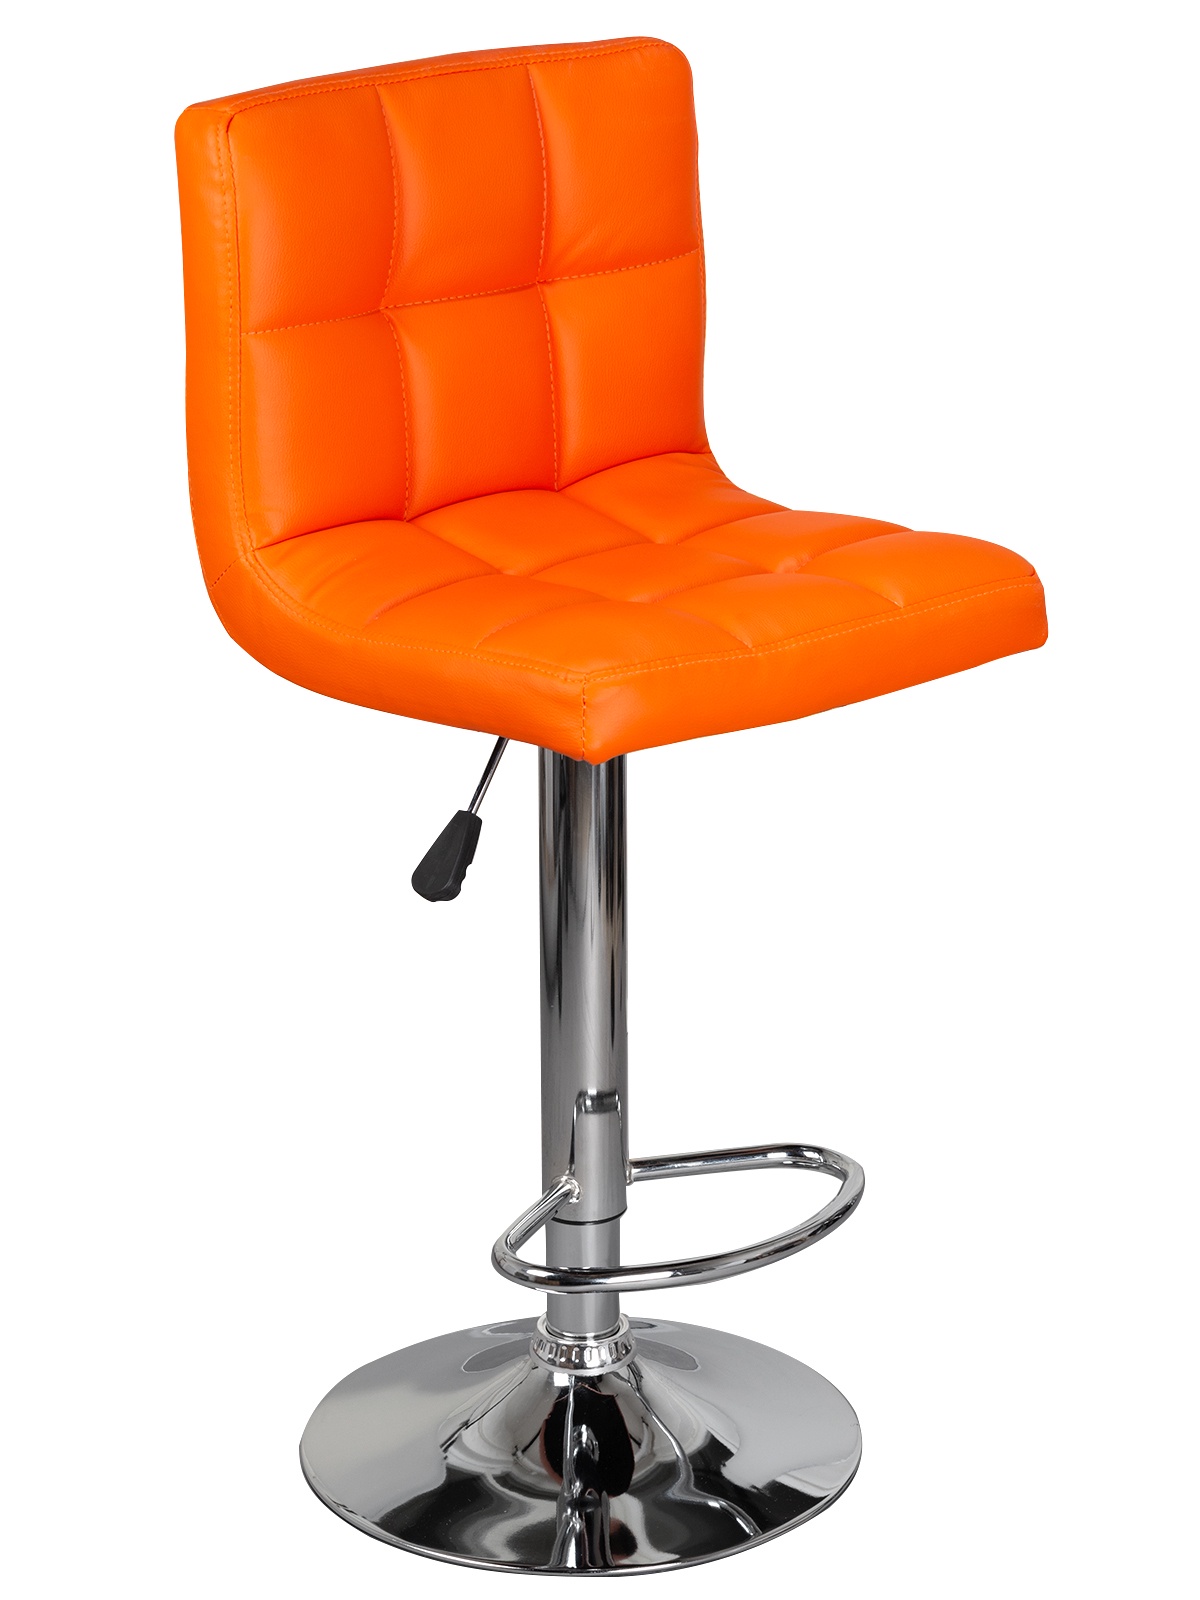 фото Барный стул COSTWAY барный стул, оранжевый